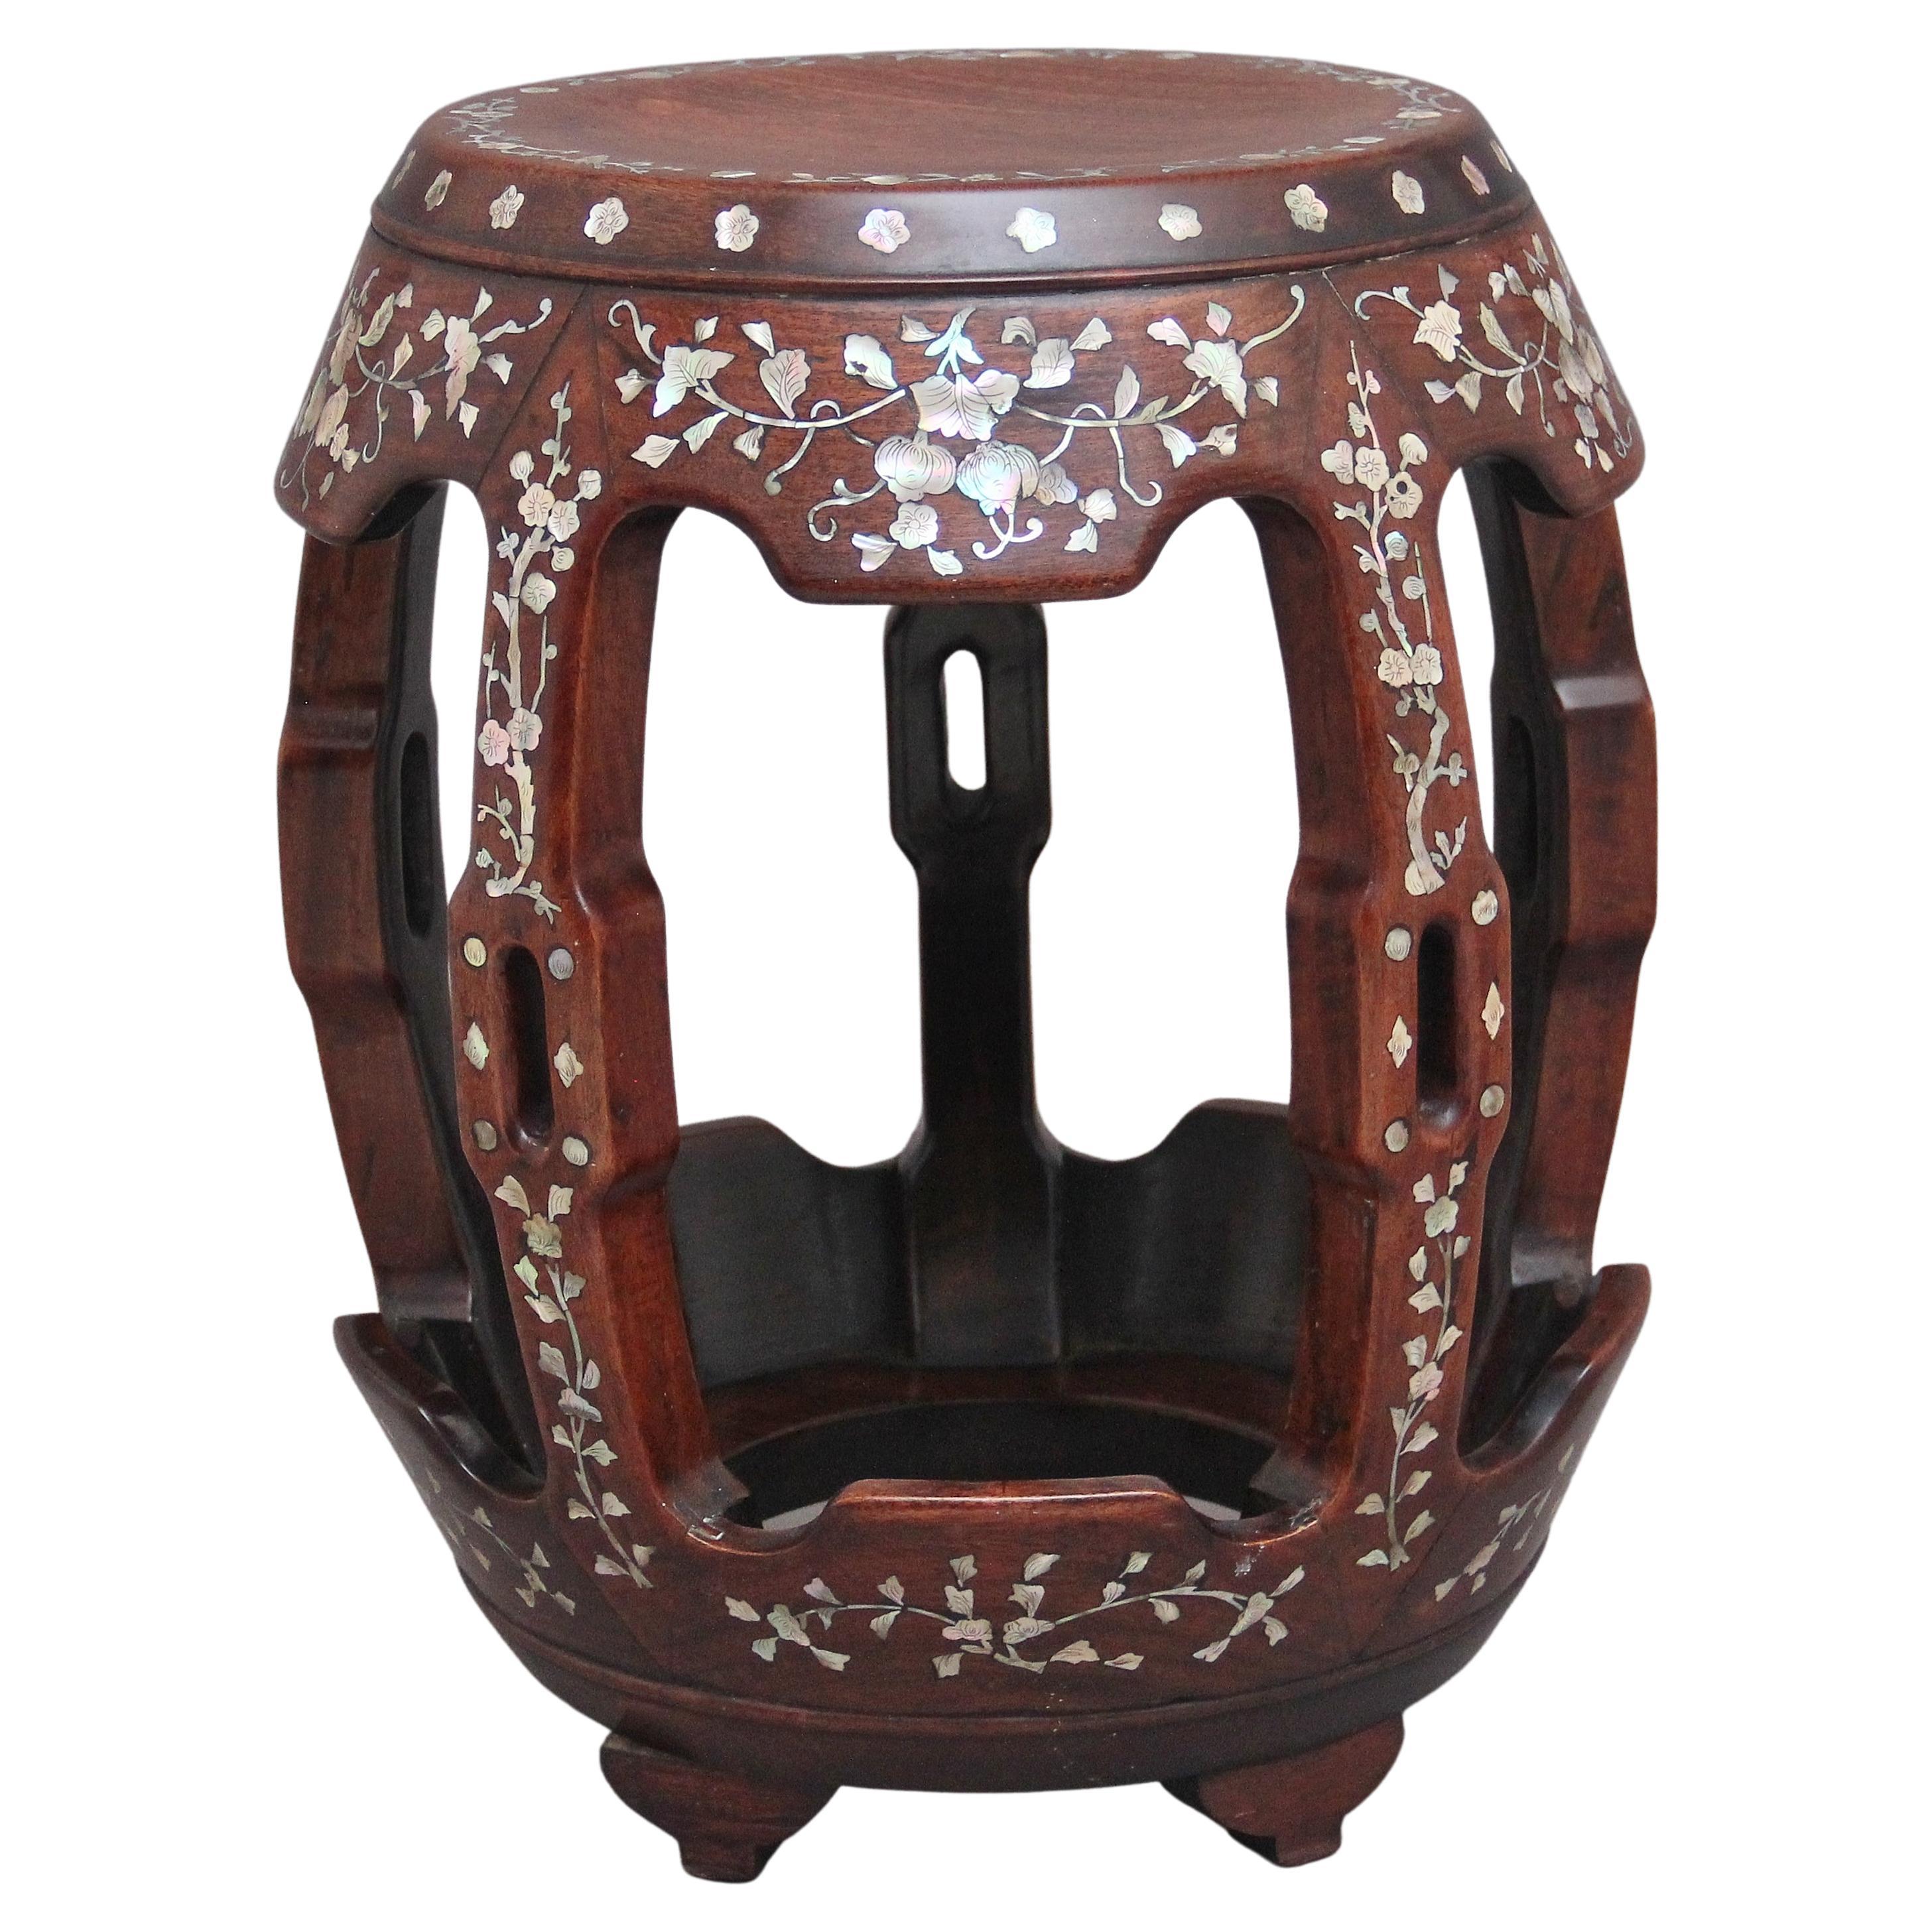 19th Century Chinese hardwood barrel table